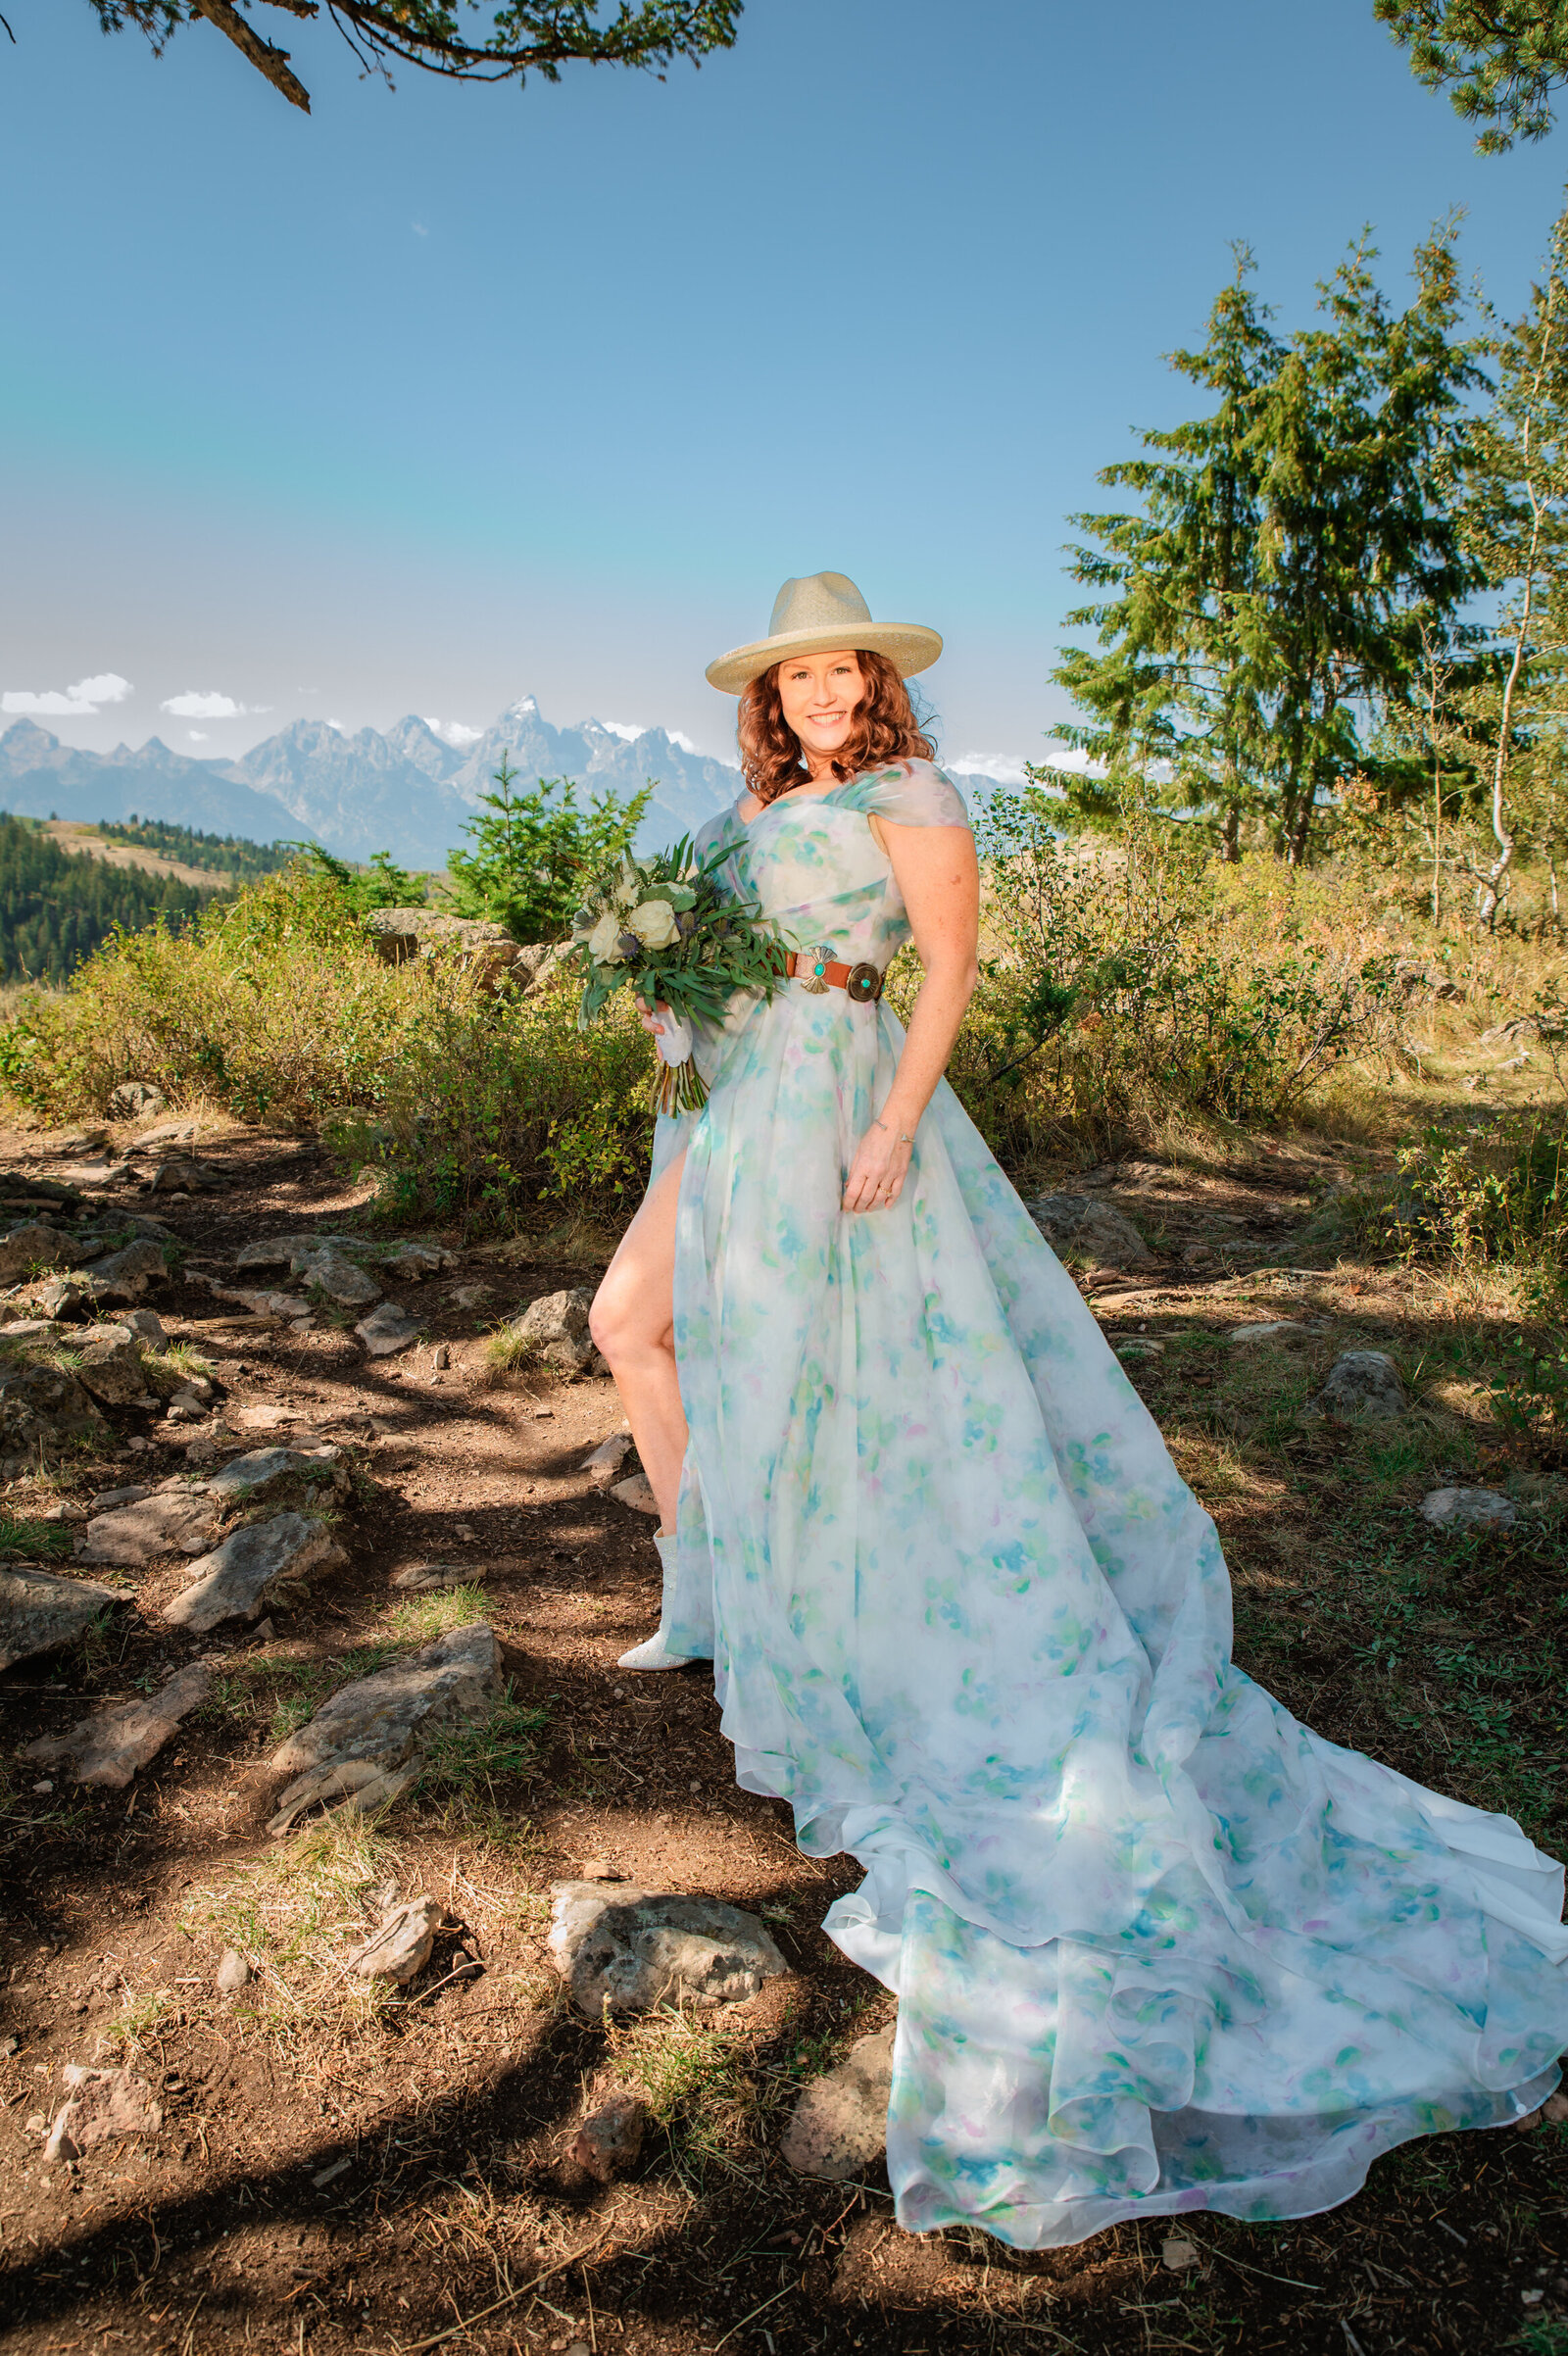 Jackson Hole photographers capture woman in blue dress during golden hour portraits